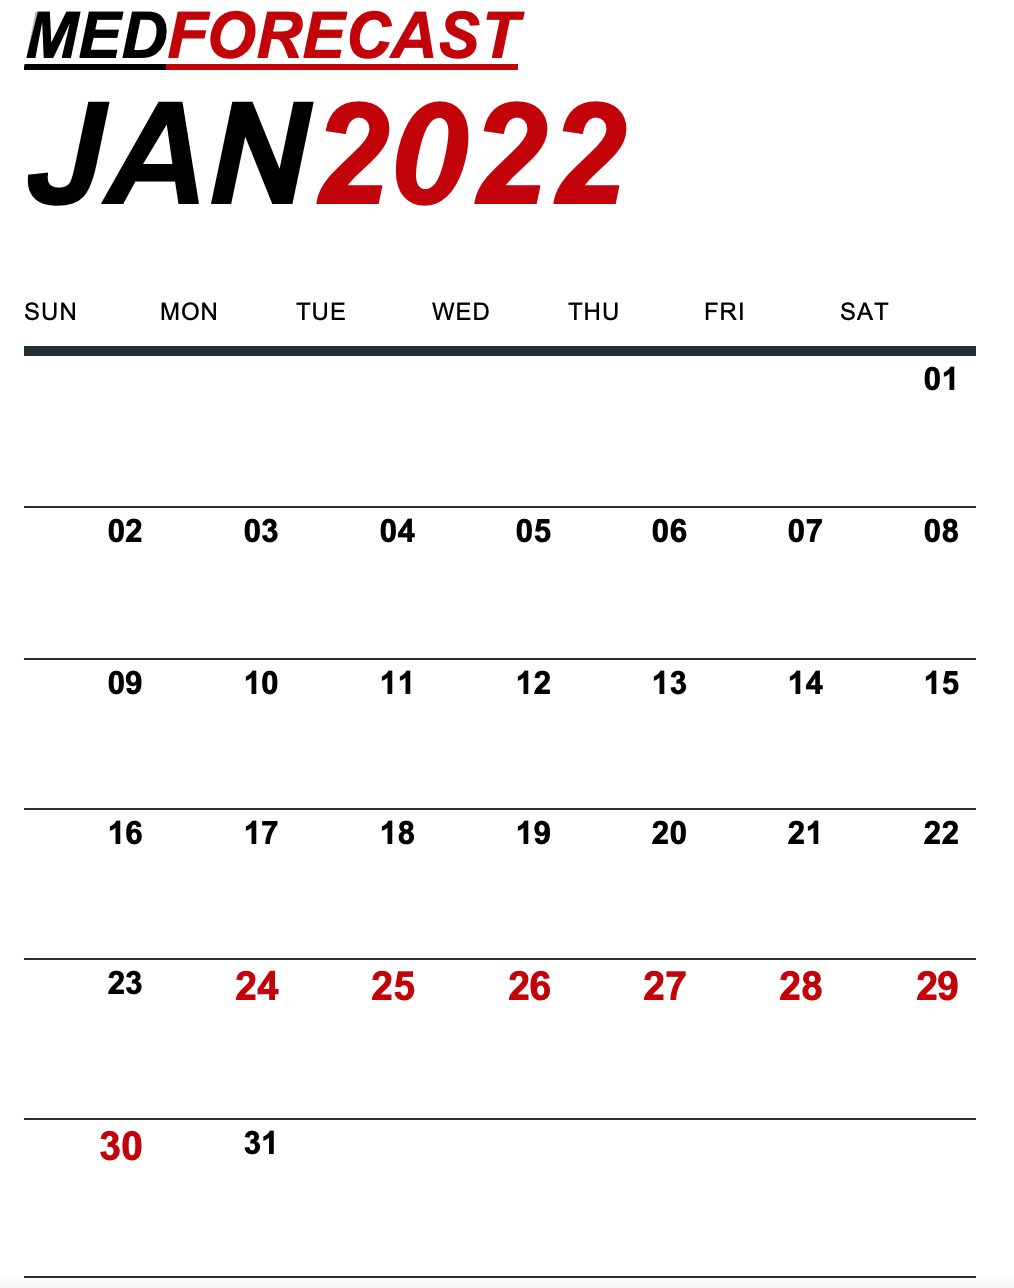 Medical News Forecast for January 24-30